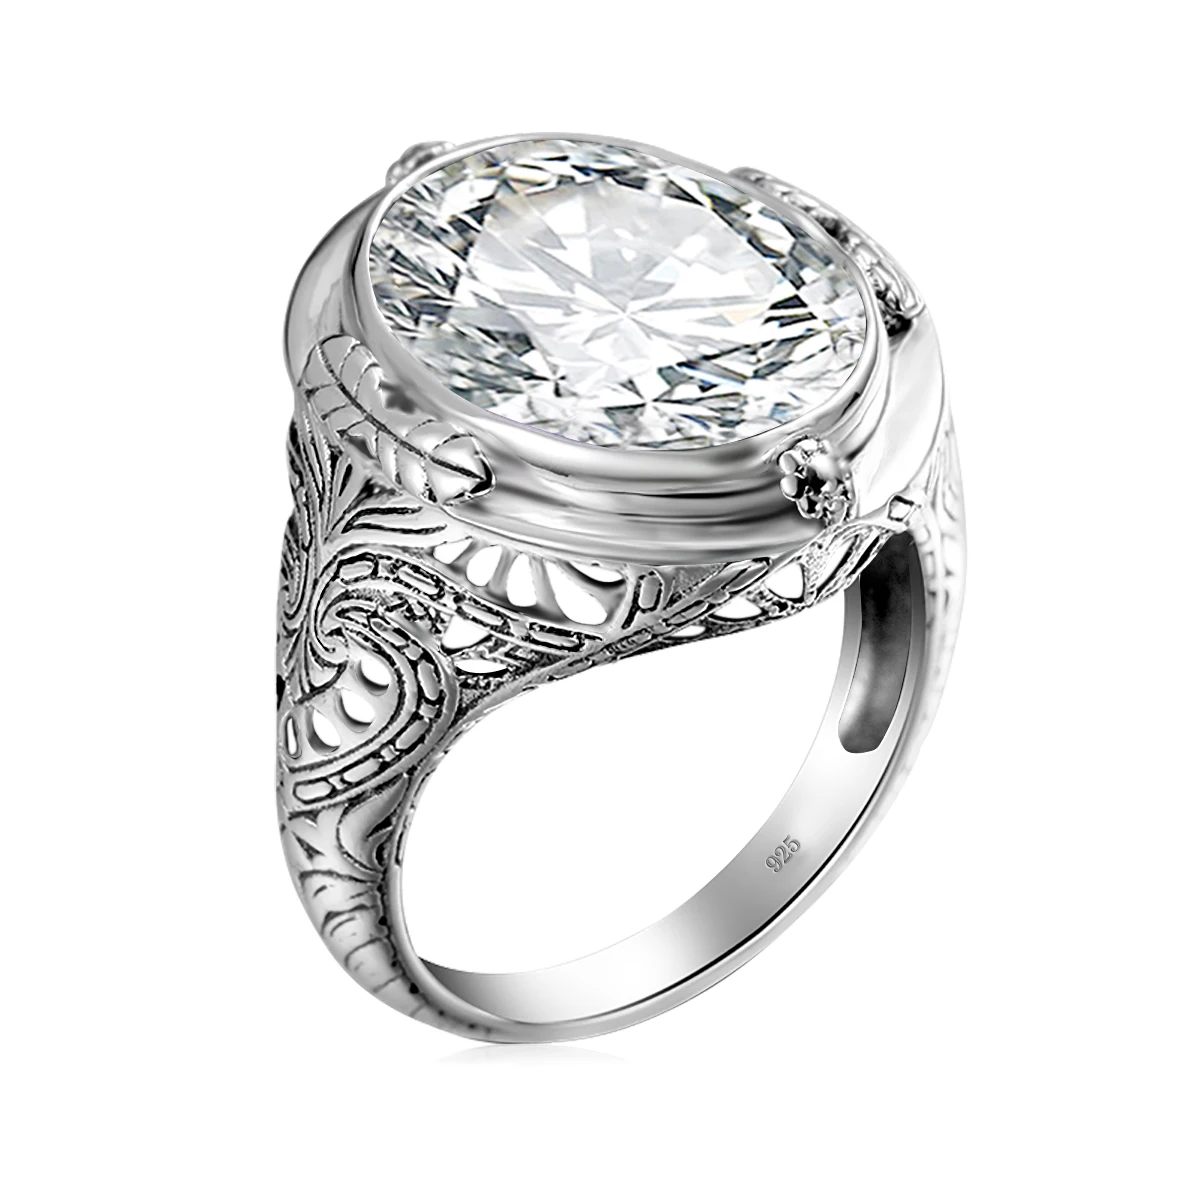 Er rings aquamarine ring handmade vintage engraving pattern men s ring boutique jewelry thumb200